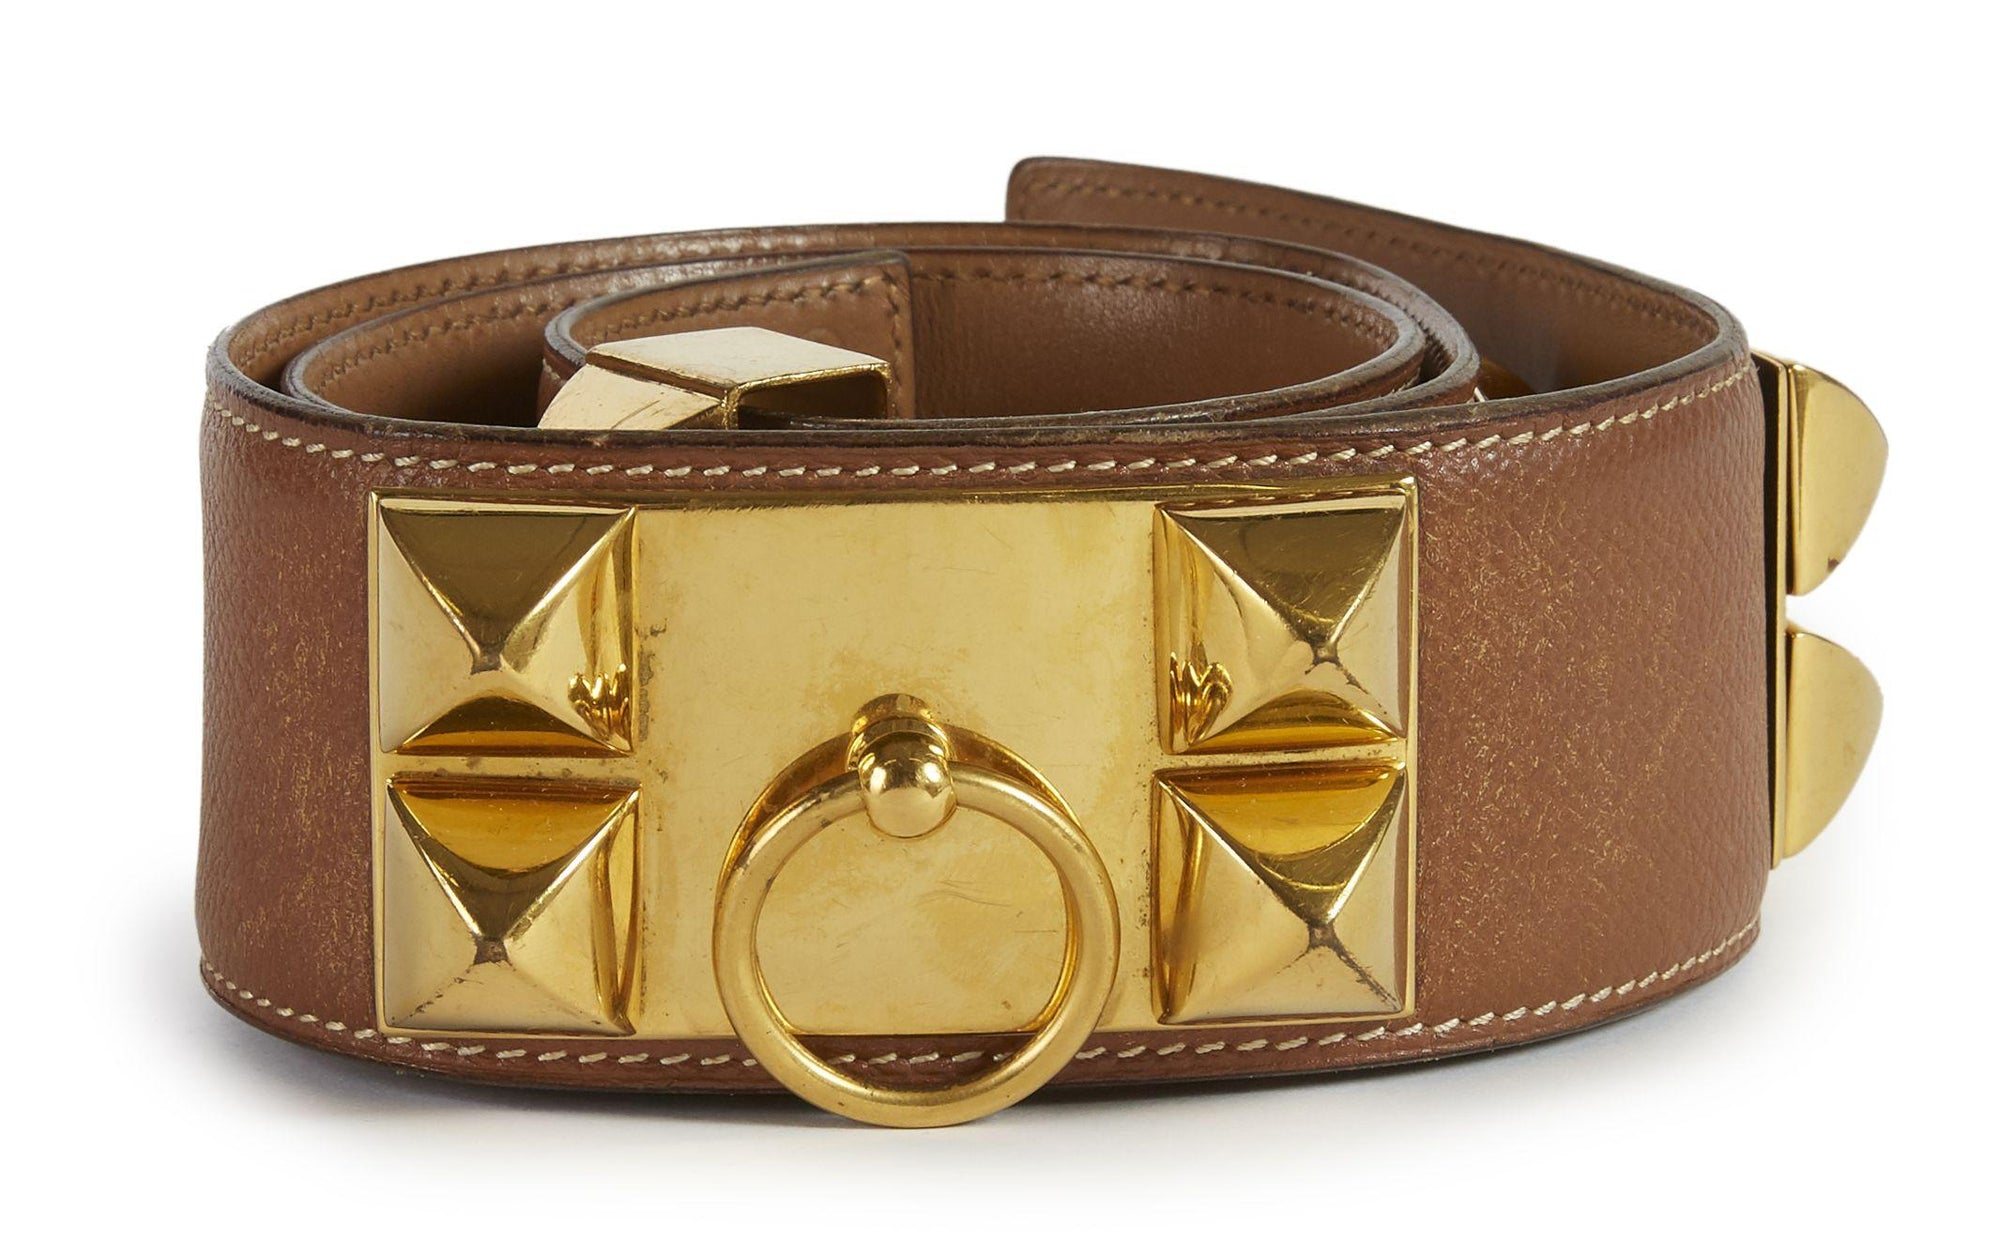 Hermès Collier De Chien Belt 70 Epsom Gold Leather with Gold Hardware